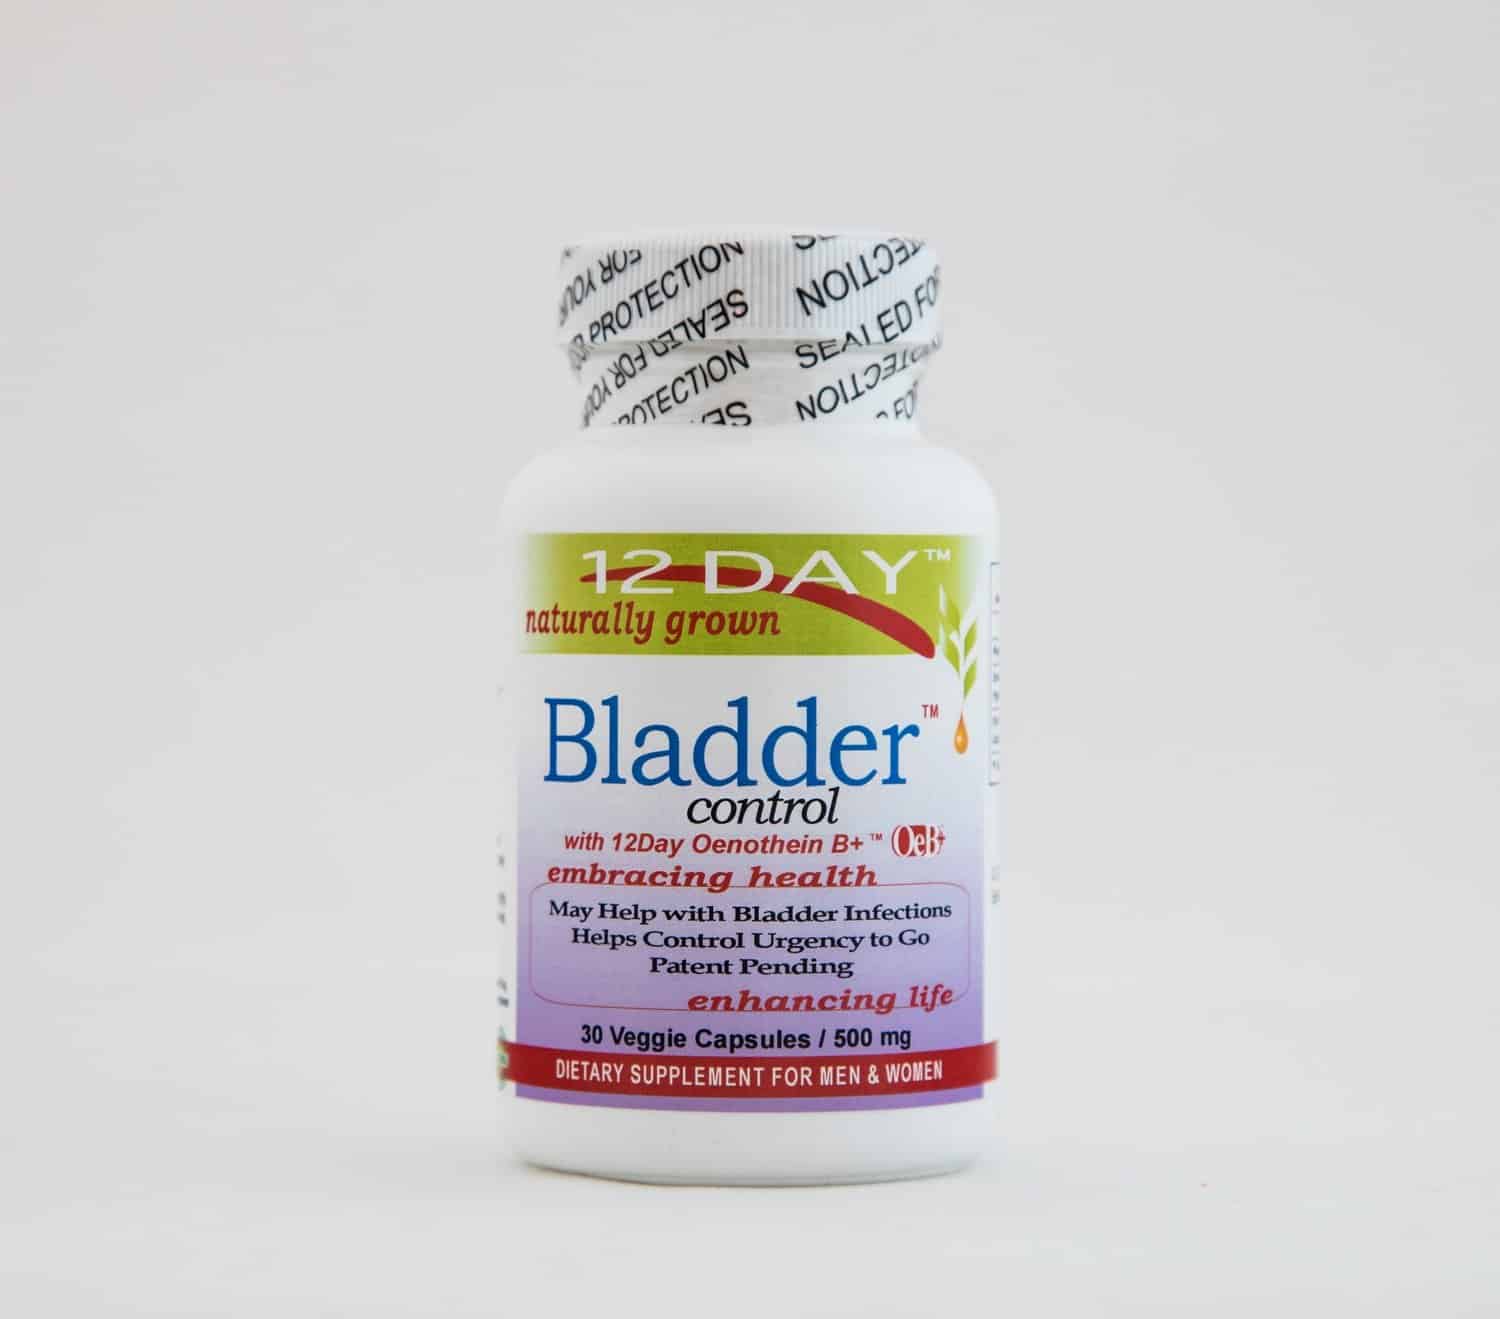 12Day Bladder Control Supplement for Women Information